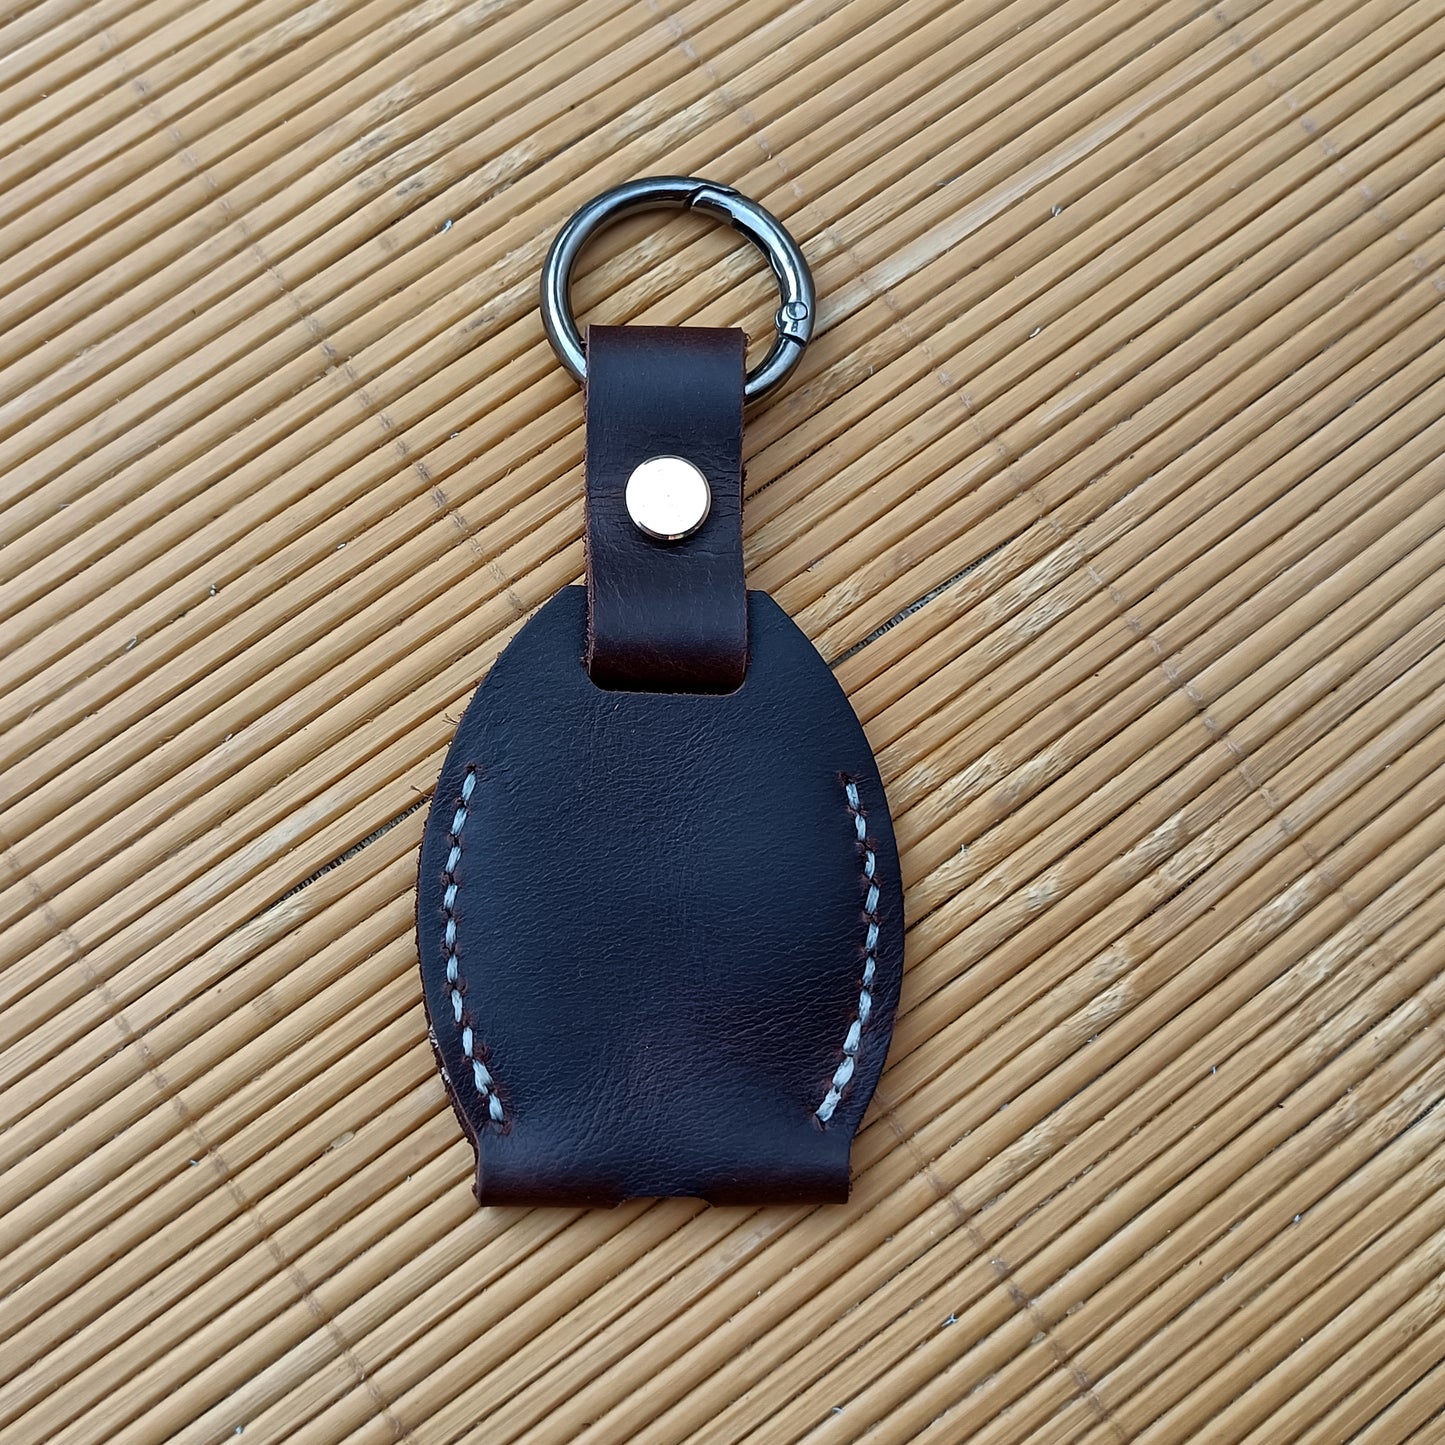 Handmade Key sleeve key fob case Key chain Leather Protective Key Holder Large Capacity Protective Case